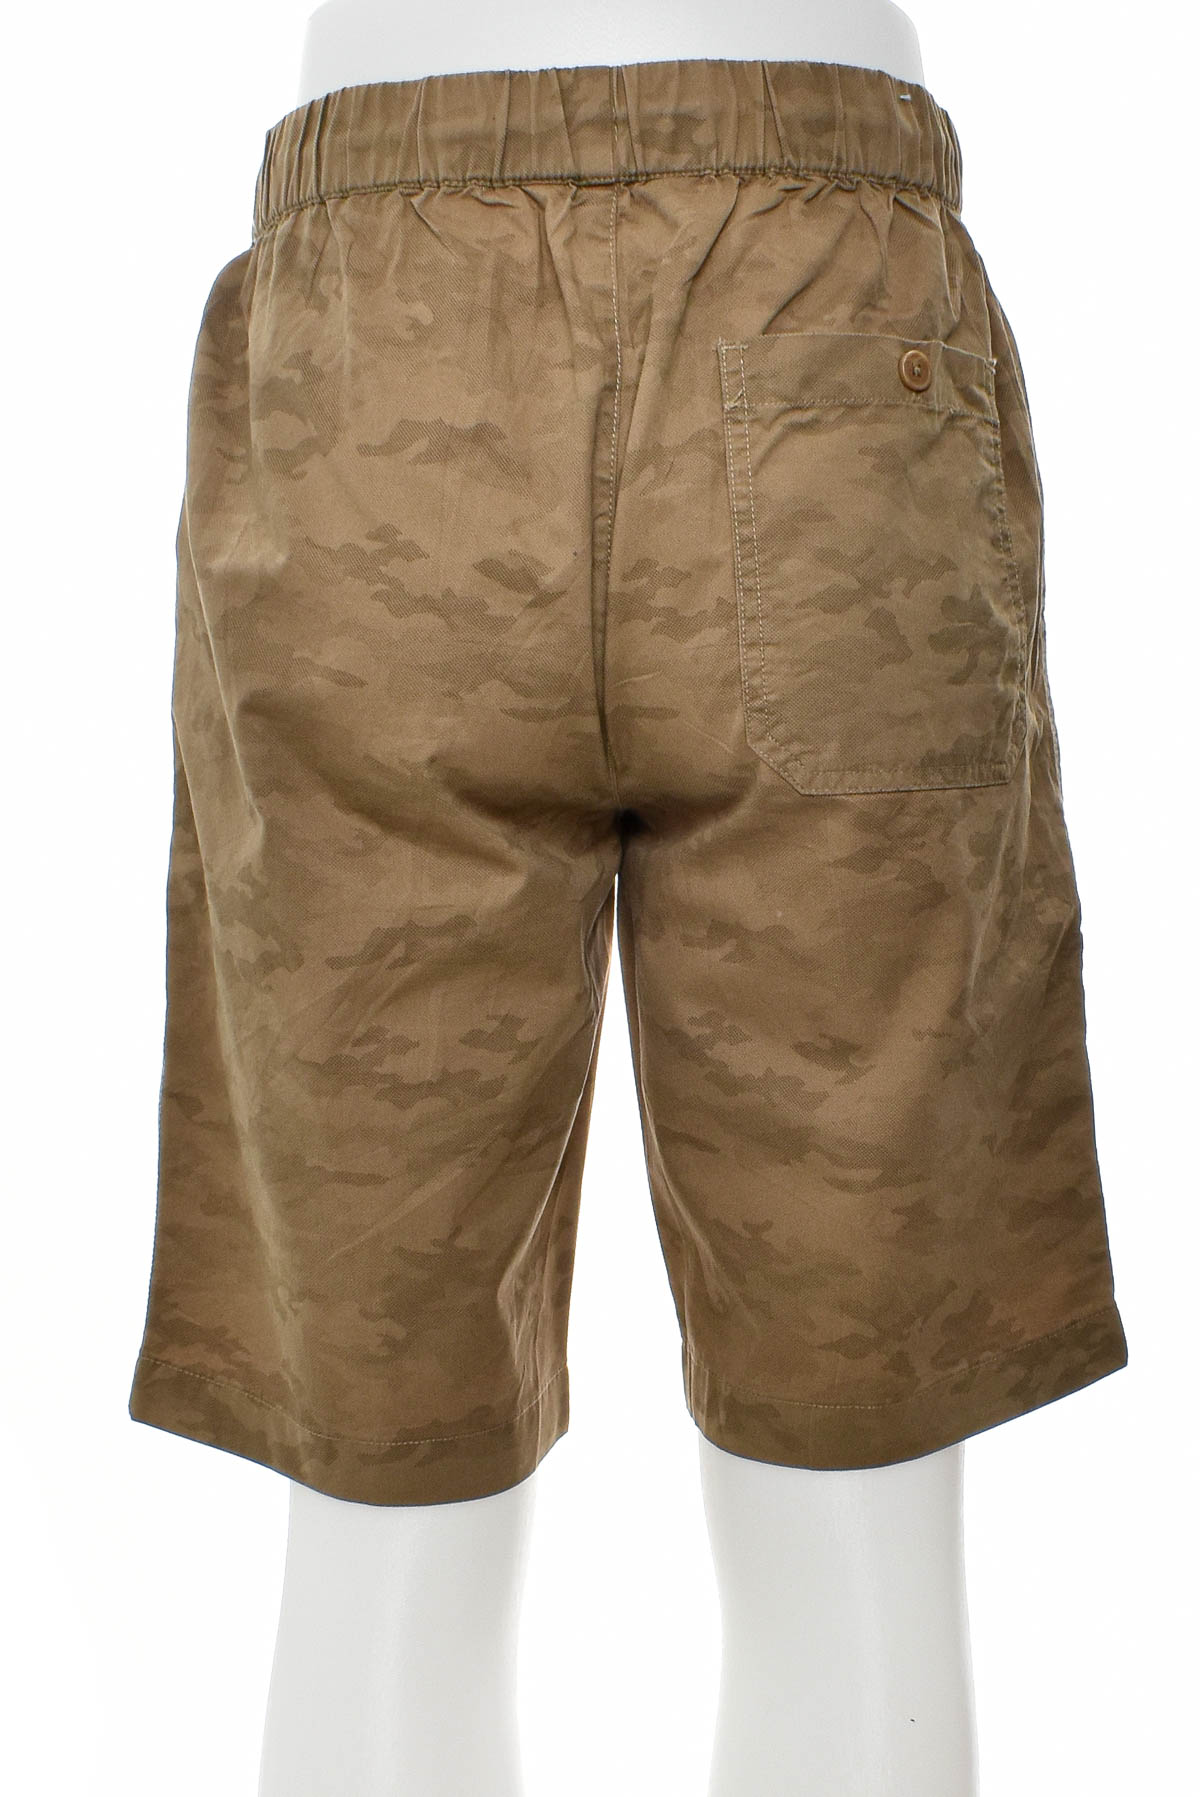 Men's shorts - Giordano - 1